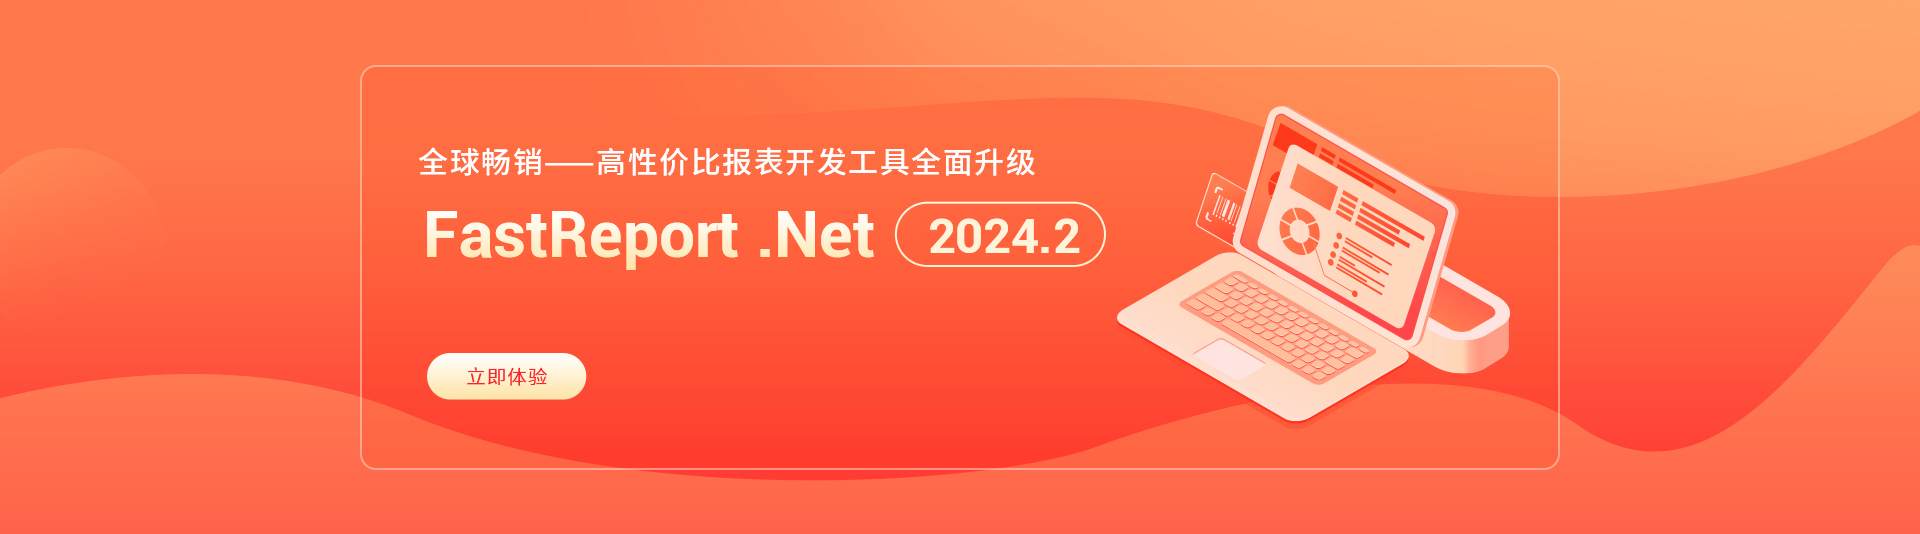 FastReport .Net 2024.2新版正式发布